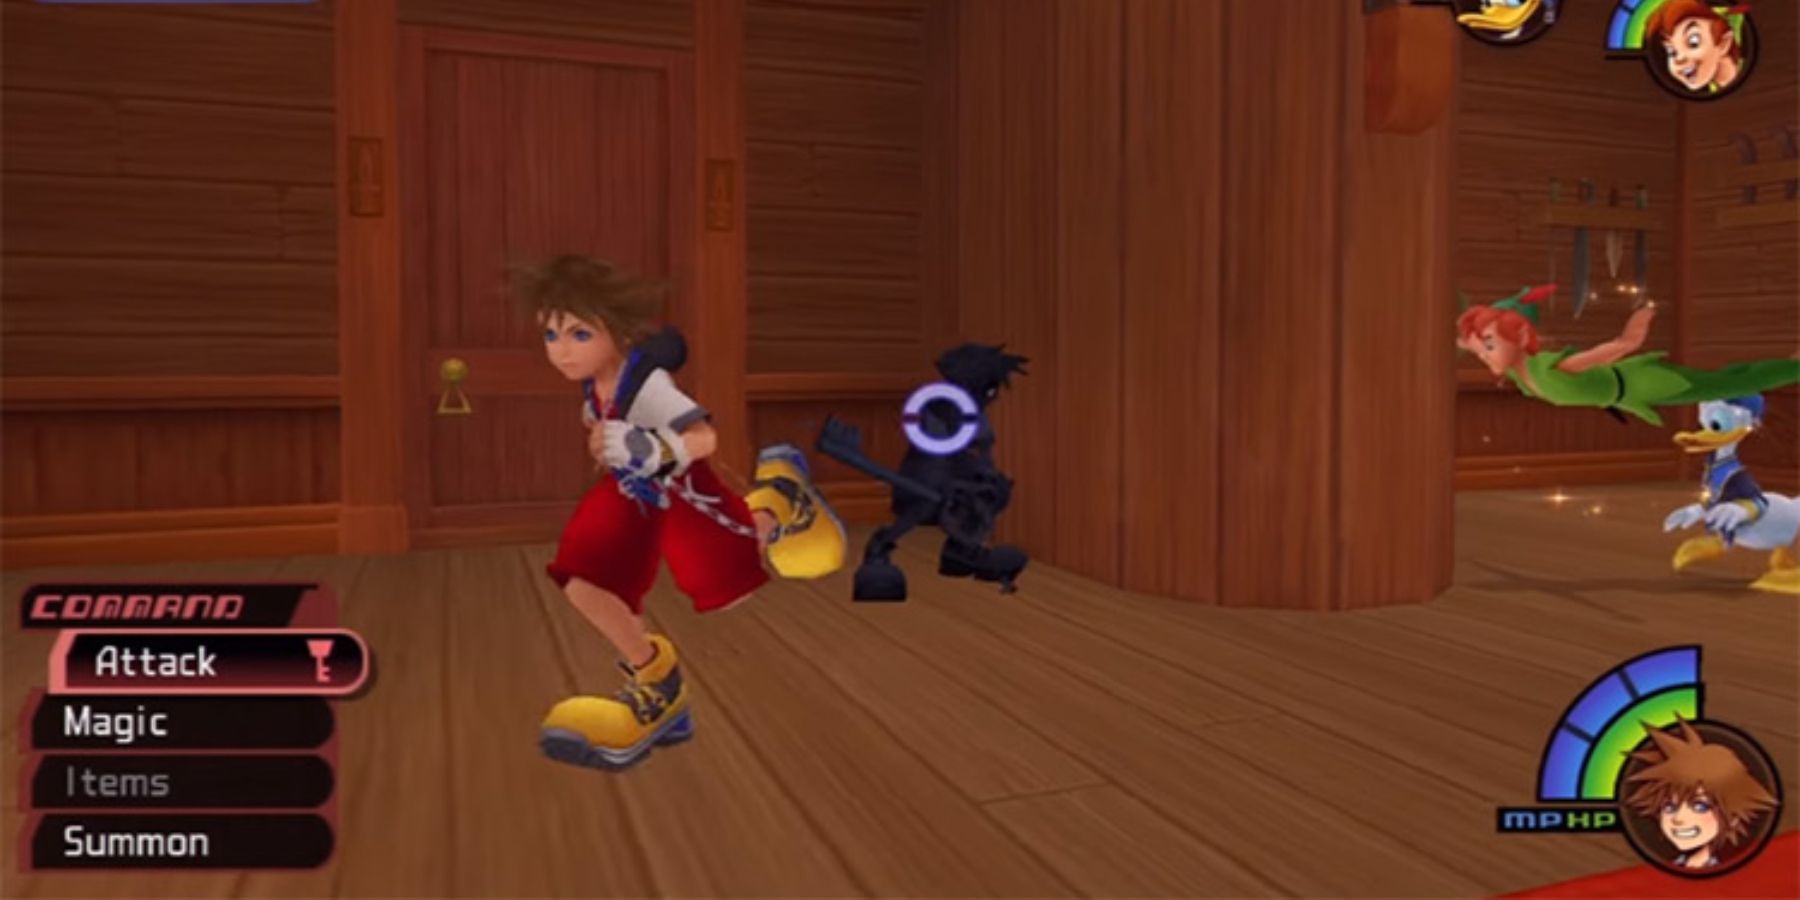 Sora flees from his dark counterpart in Kingdom Hearts